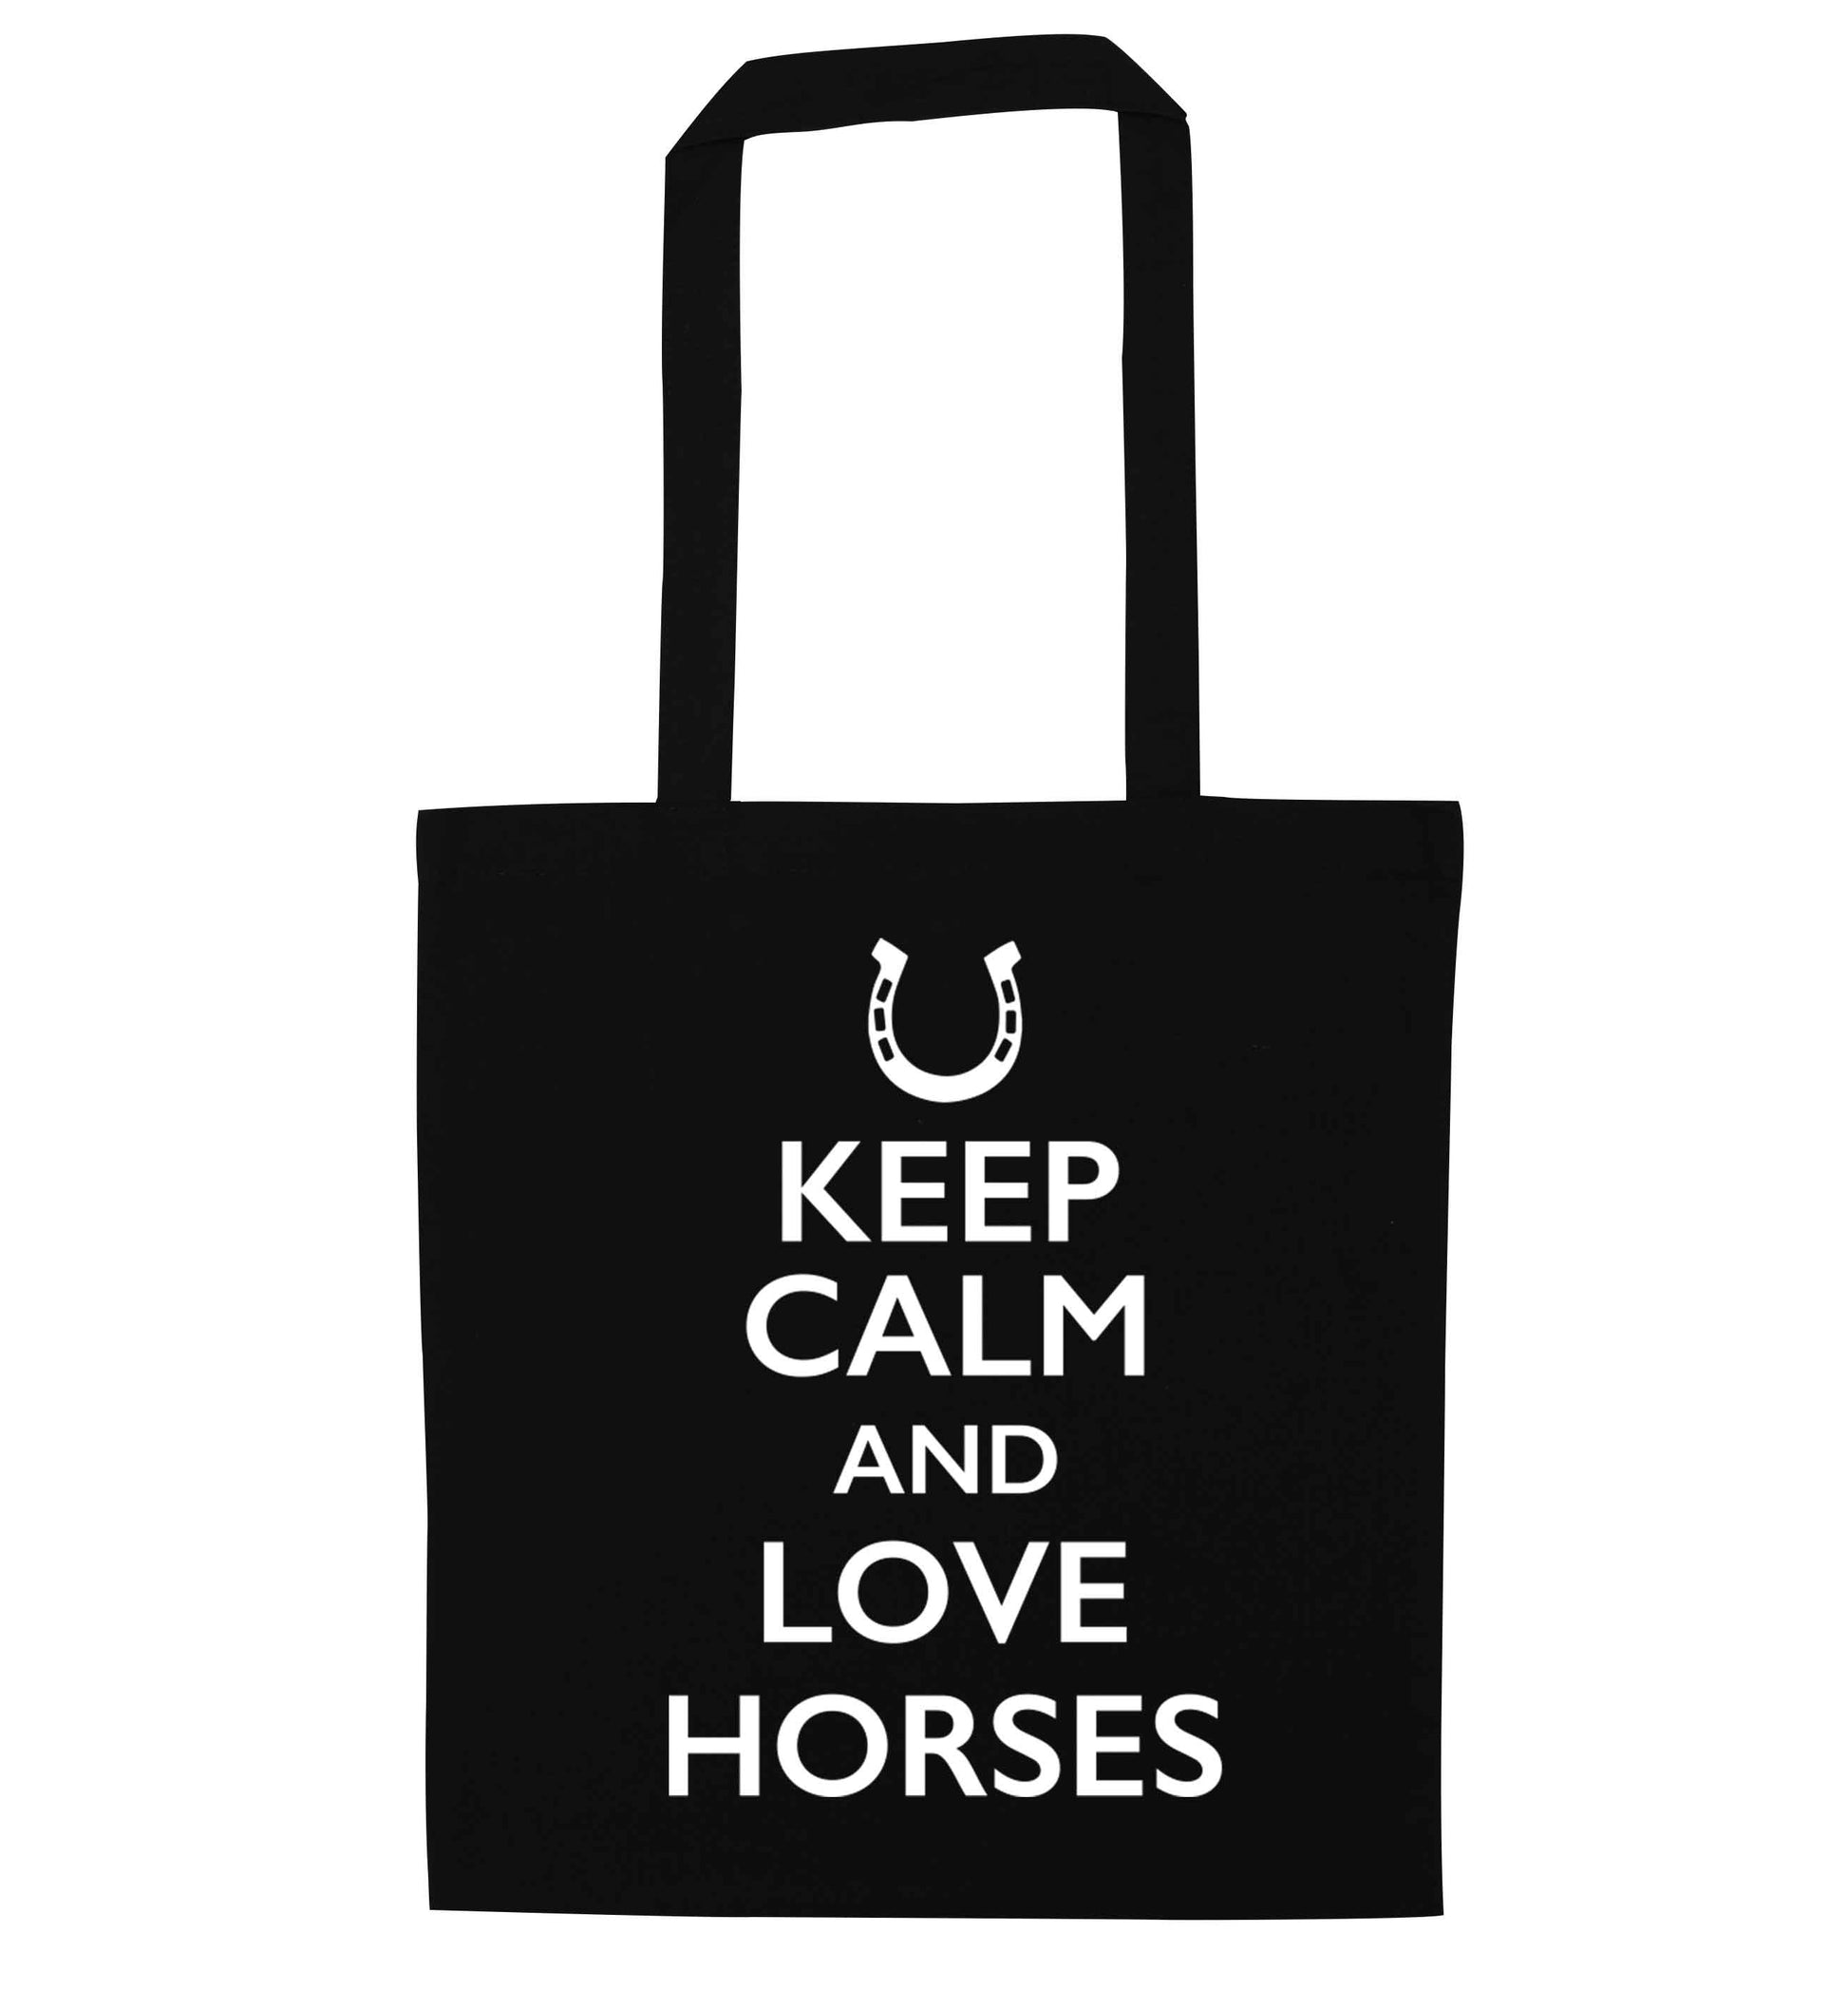 Keep calm and love horses black tote bag